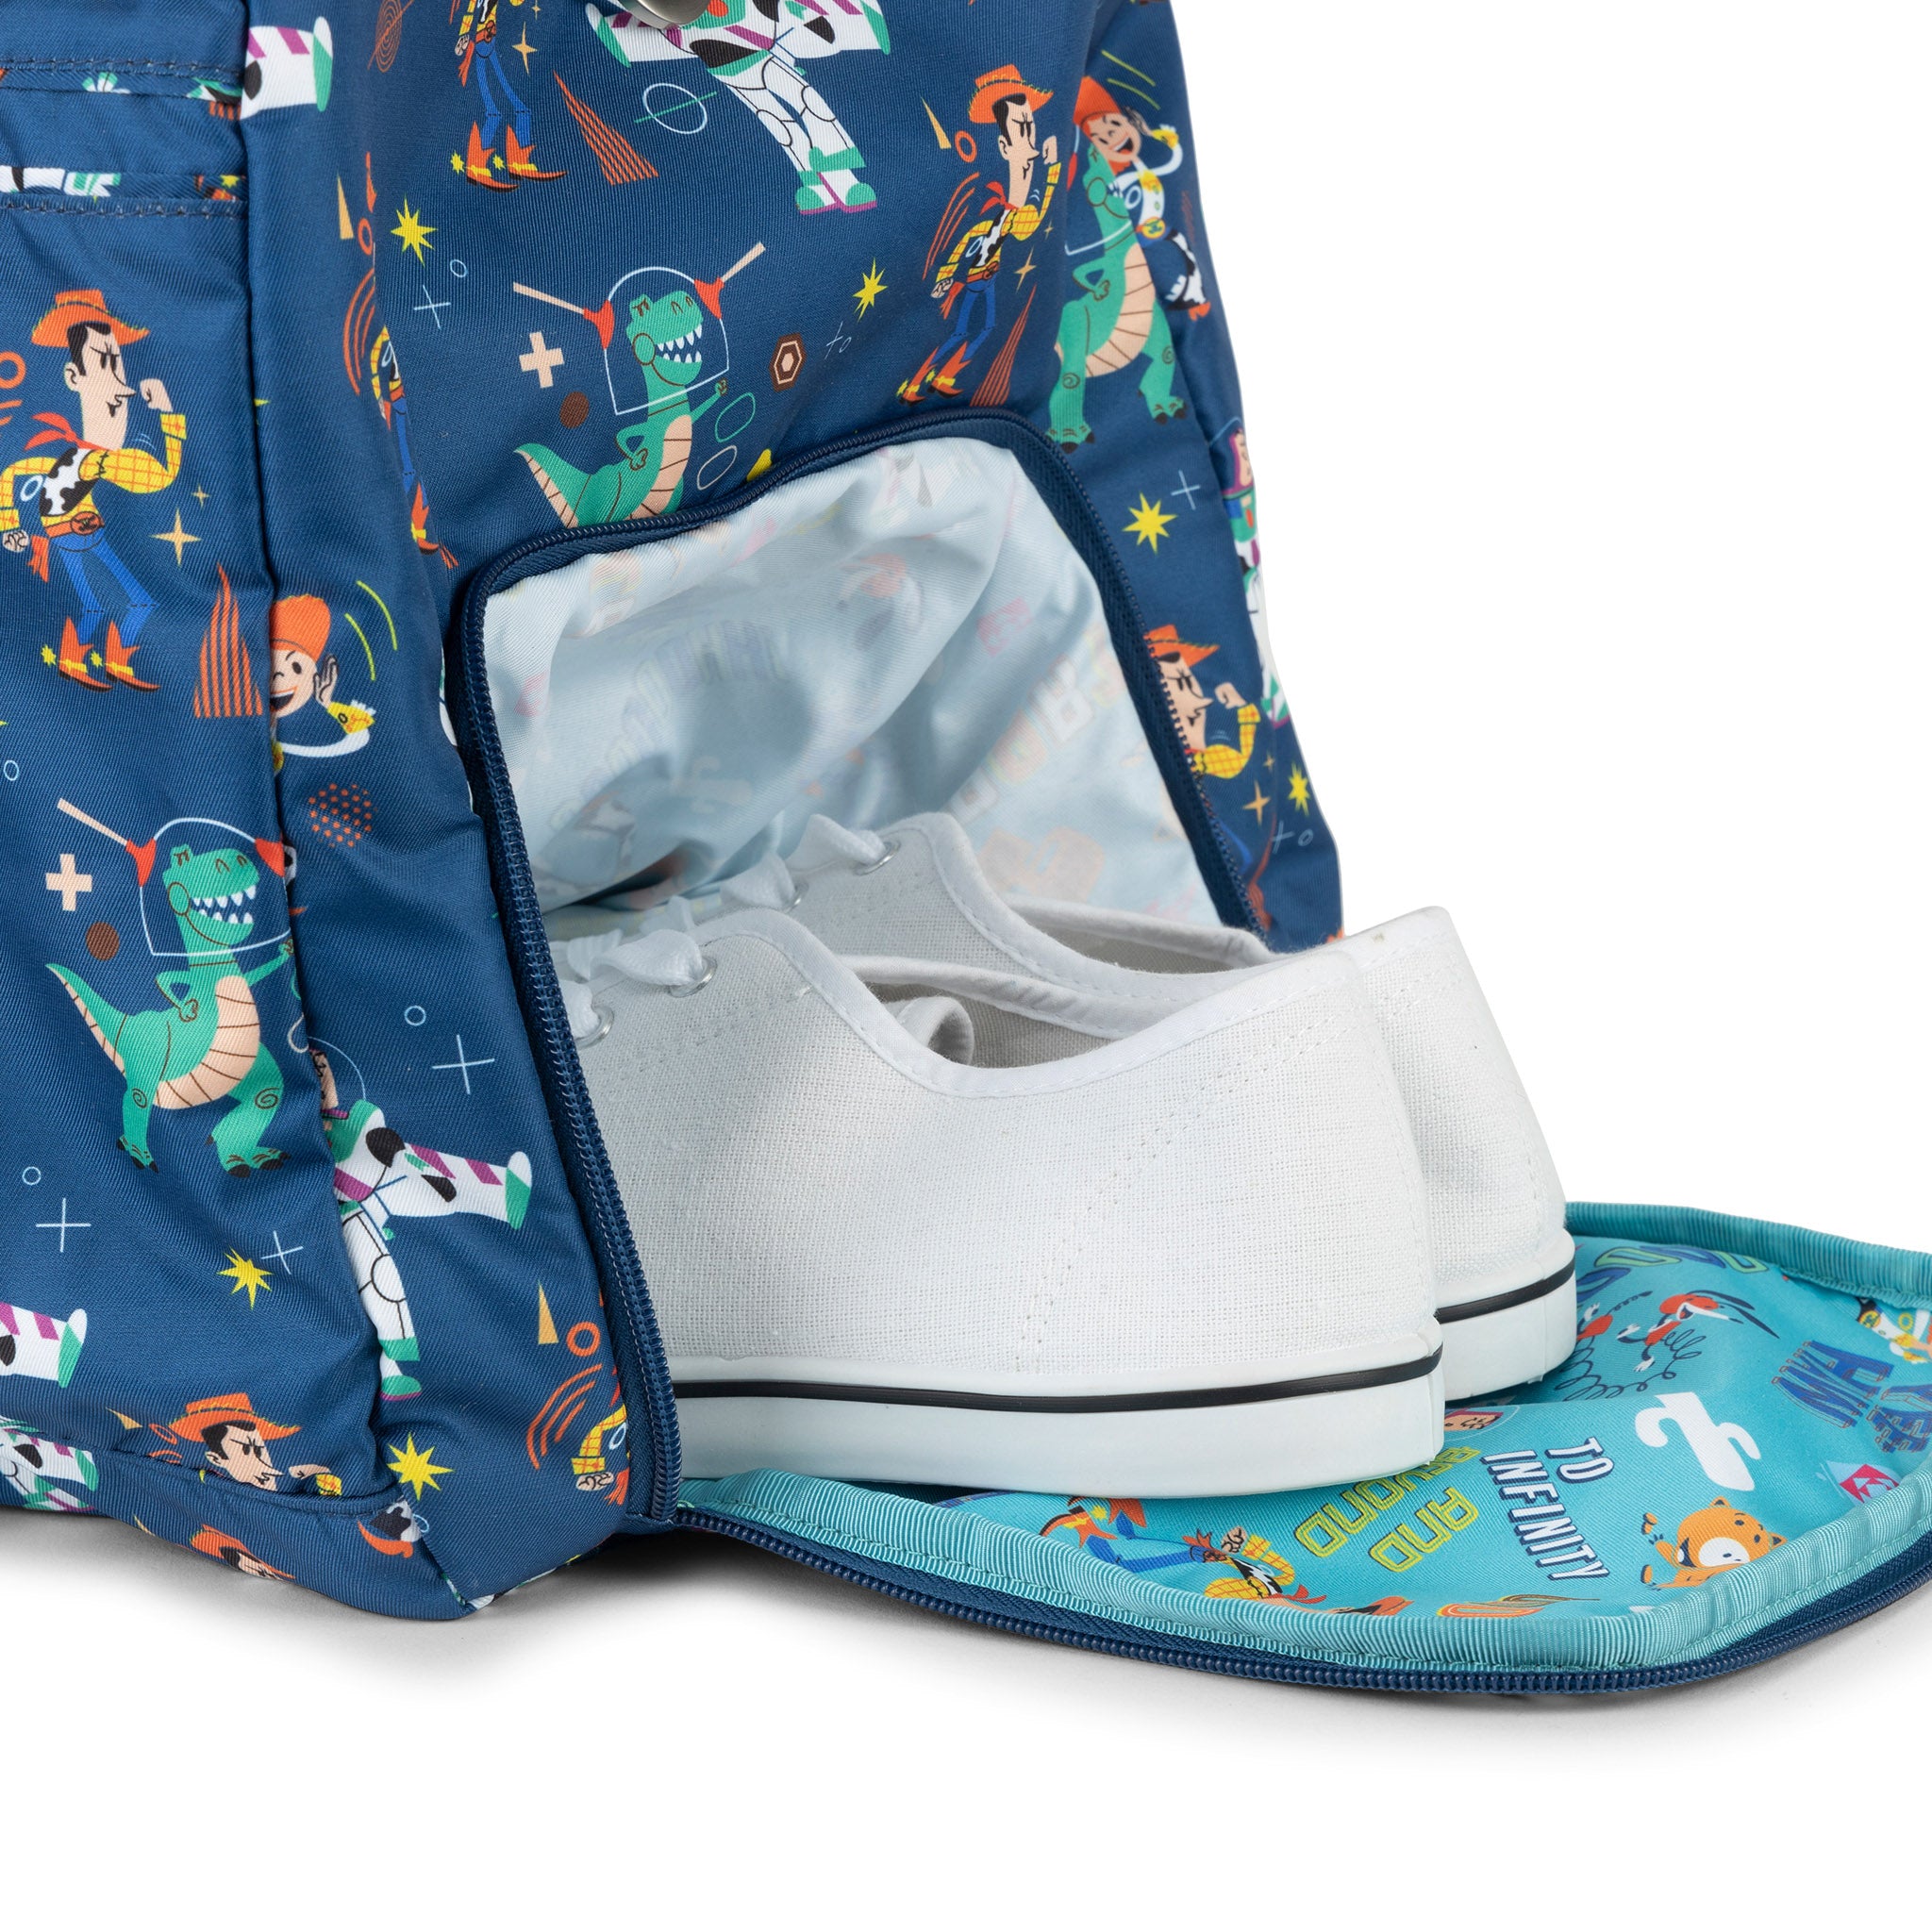 Jujube Disney Pixar Toy Story Super Star Plus duffel bag side shoe compartment